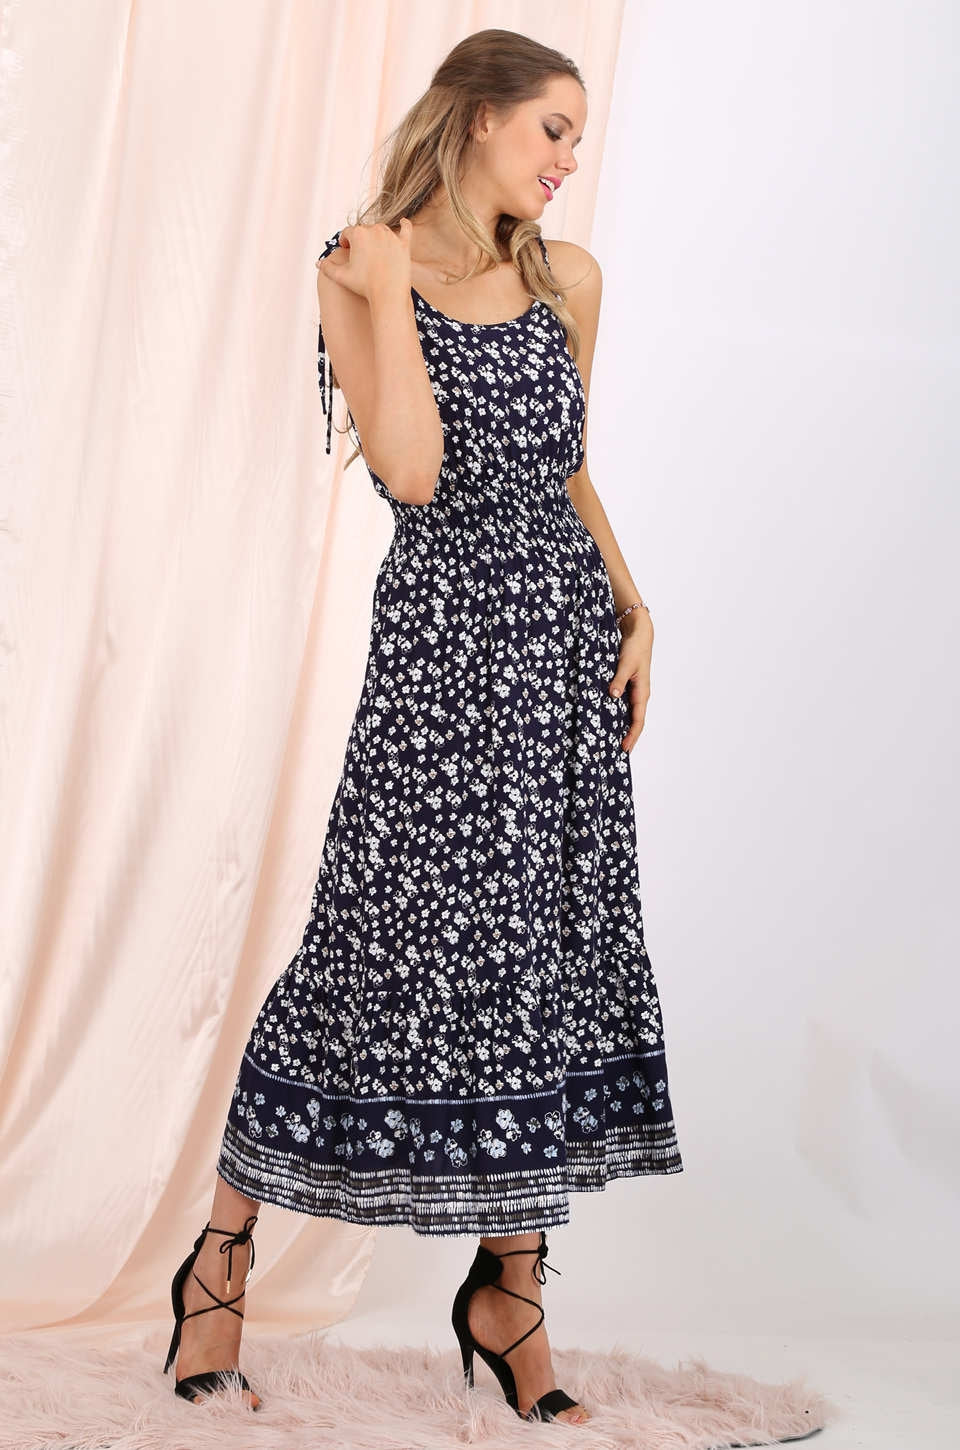 MISS PINKI Sara maxi dress in navy paisley print